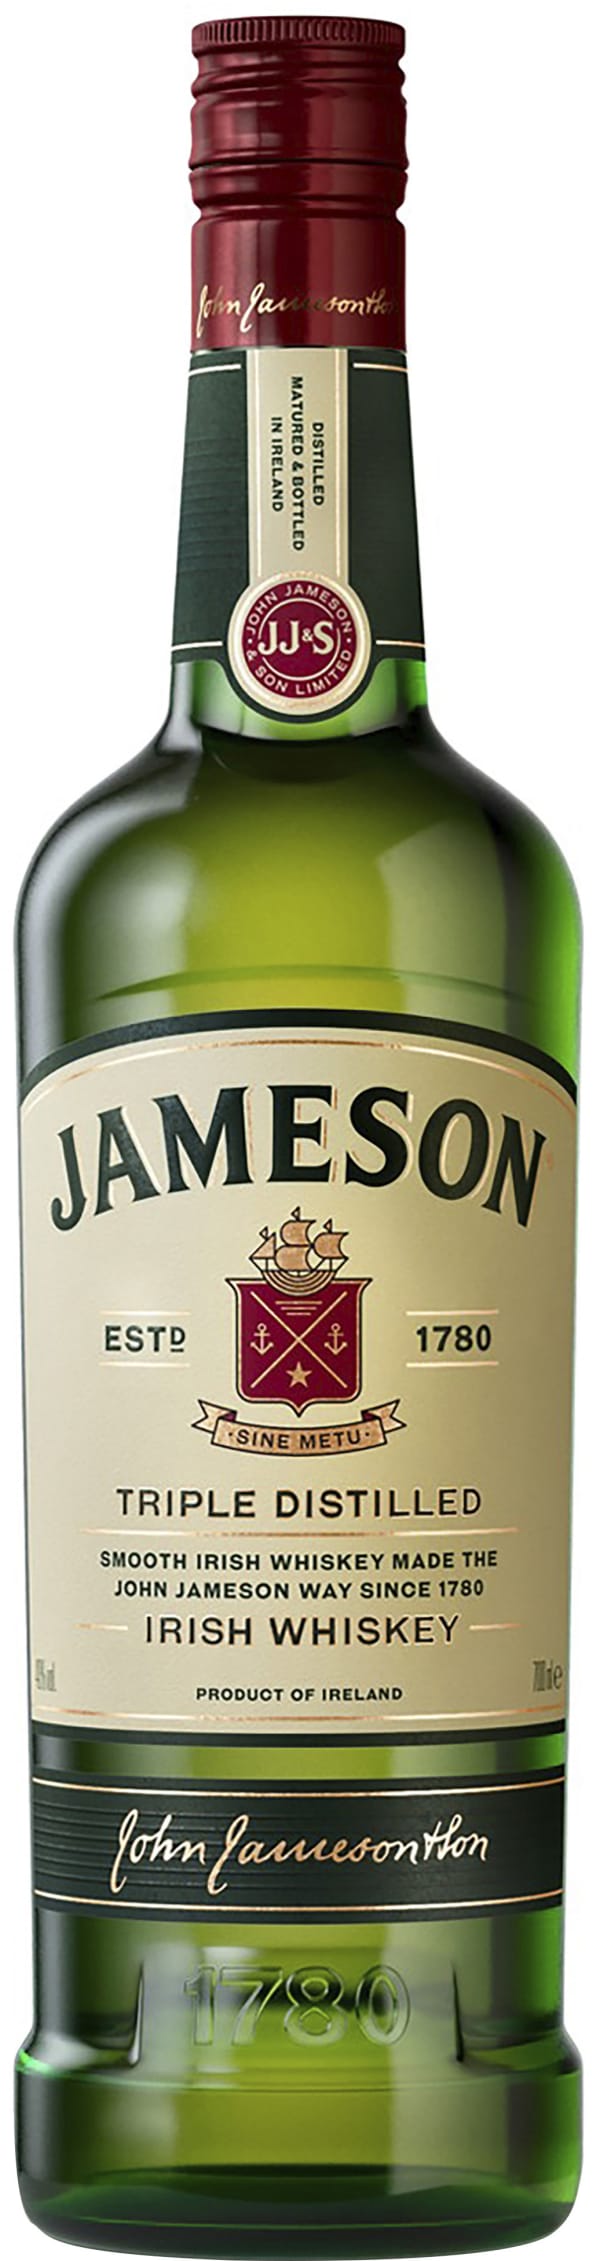 jameson whiskey heir